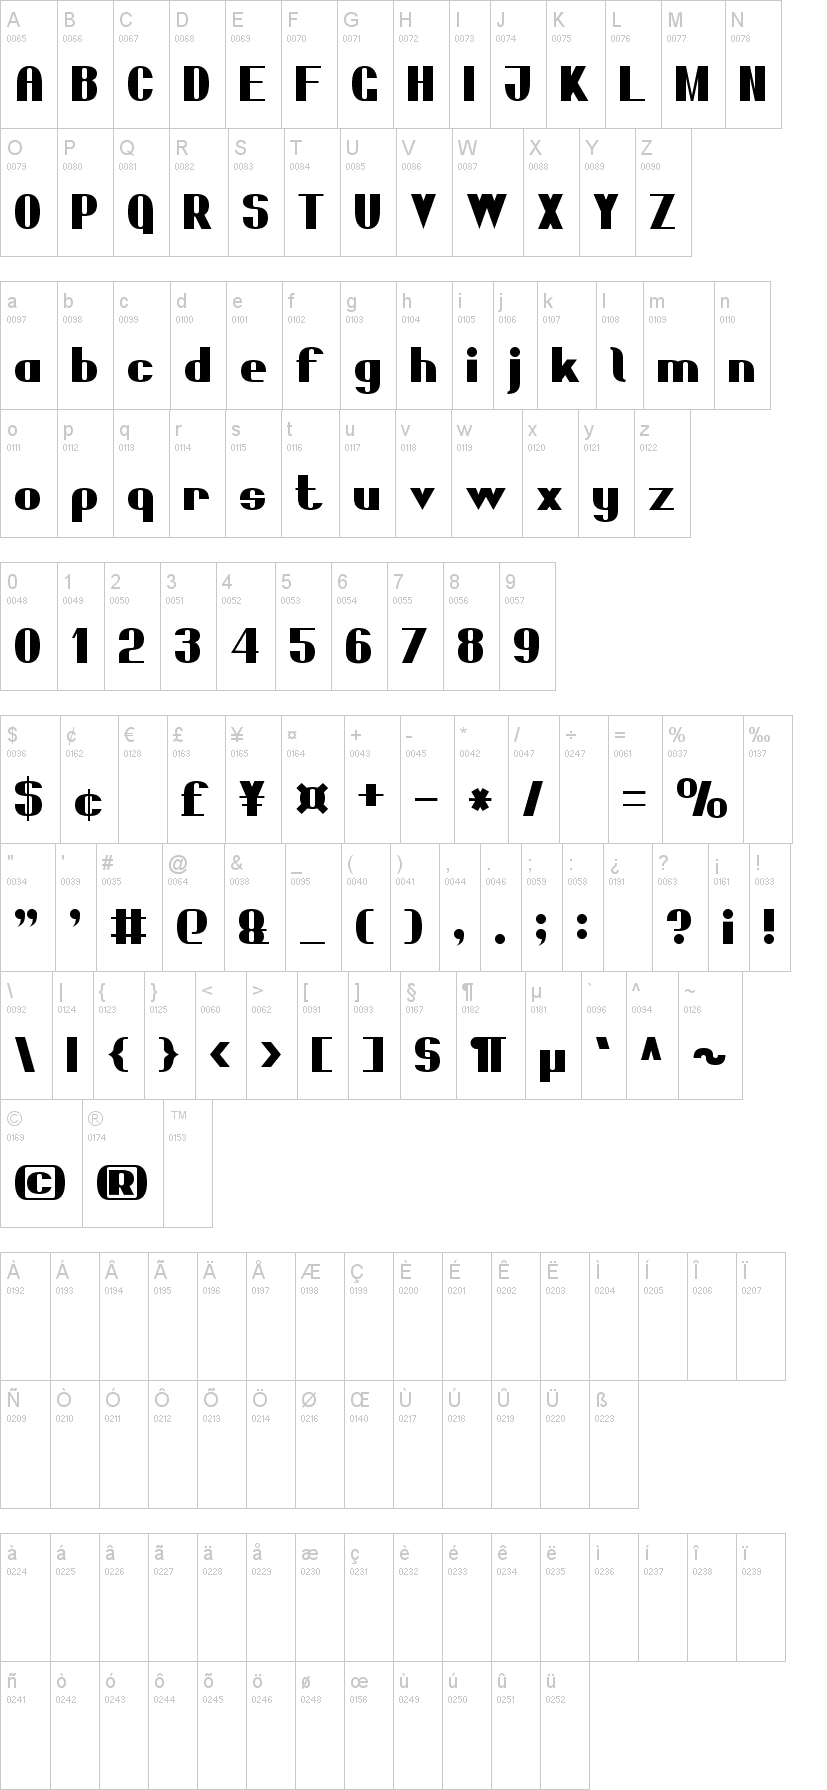 Bold Sans Serif 7